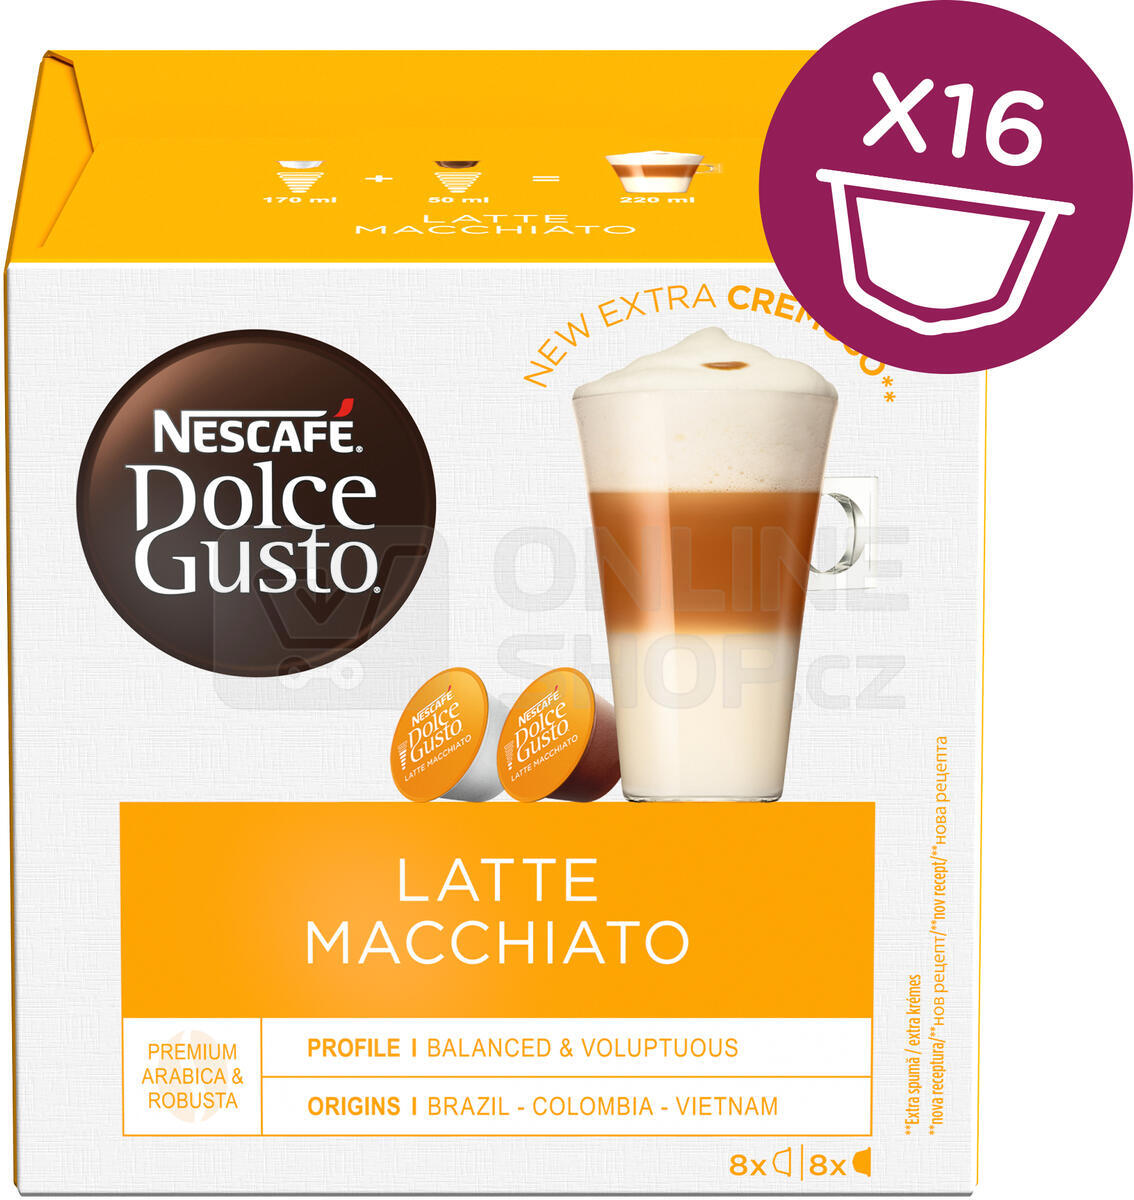 SET Kapsle Espresso Dolce Gusto + Kapsle Latte Macchiatto Dolce Gusto